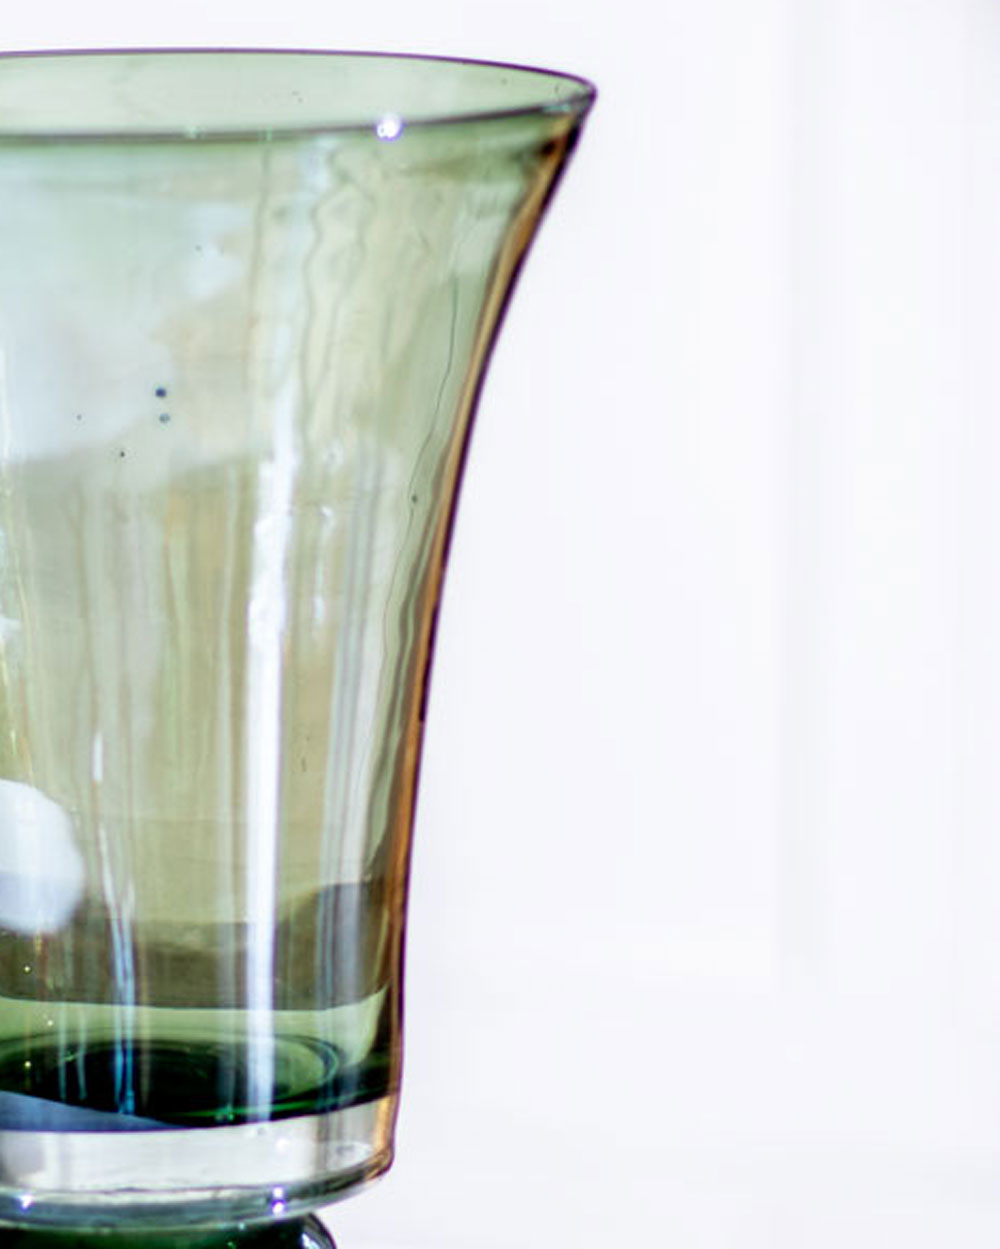 Alina Glass Vase